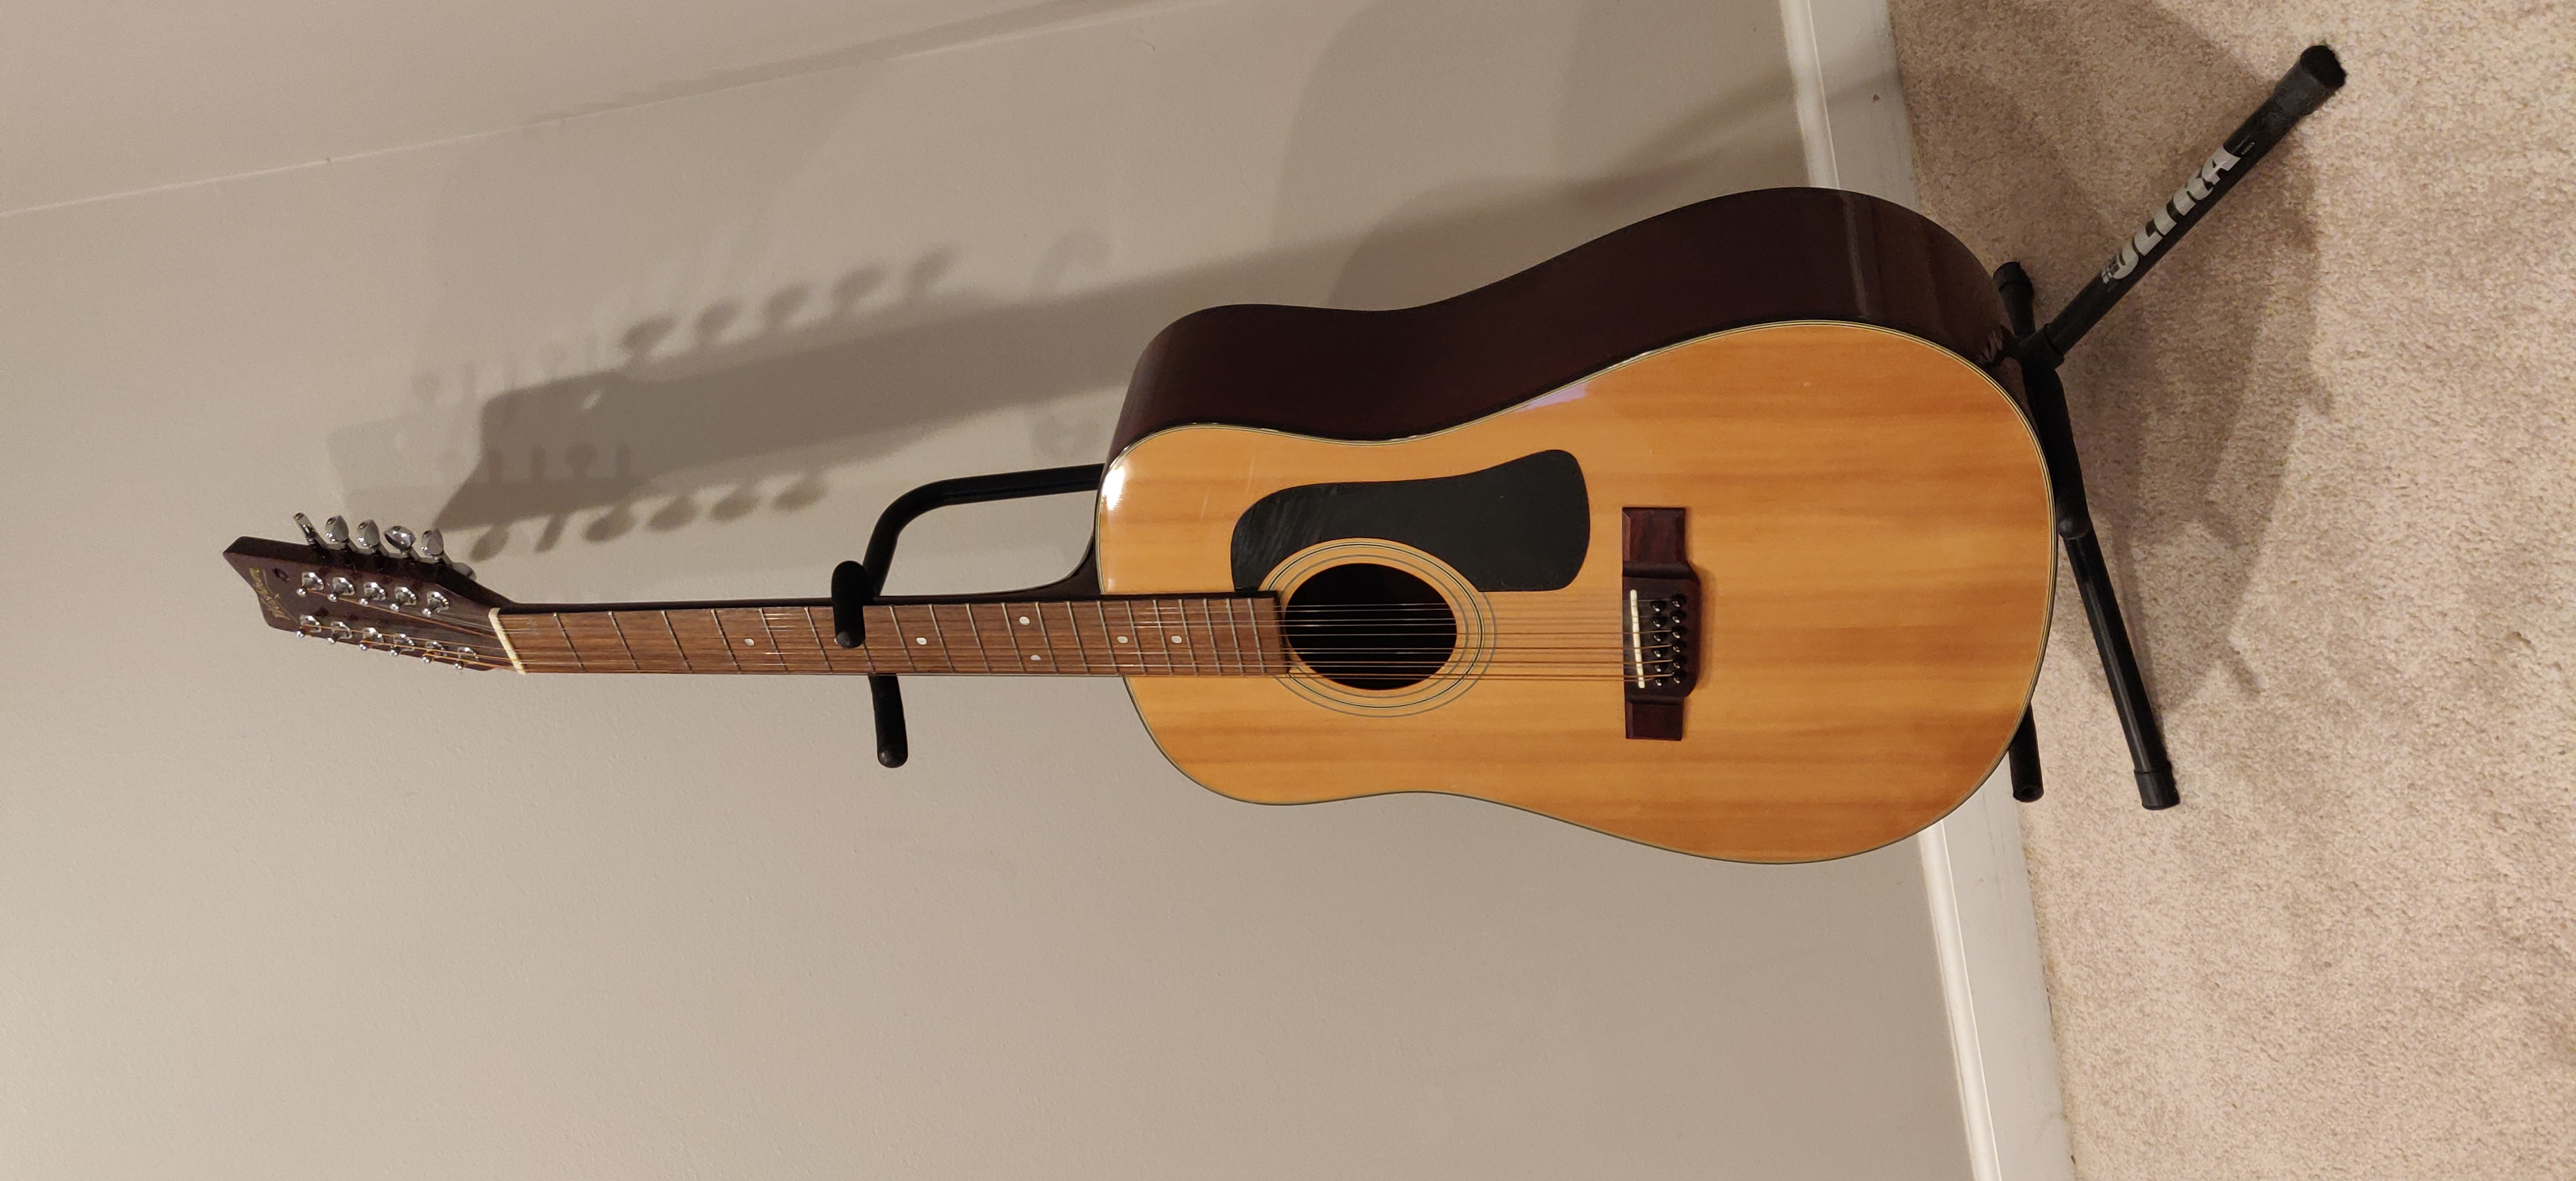 A twelve string guitar